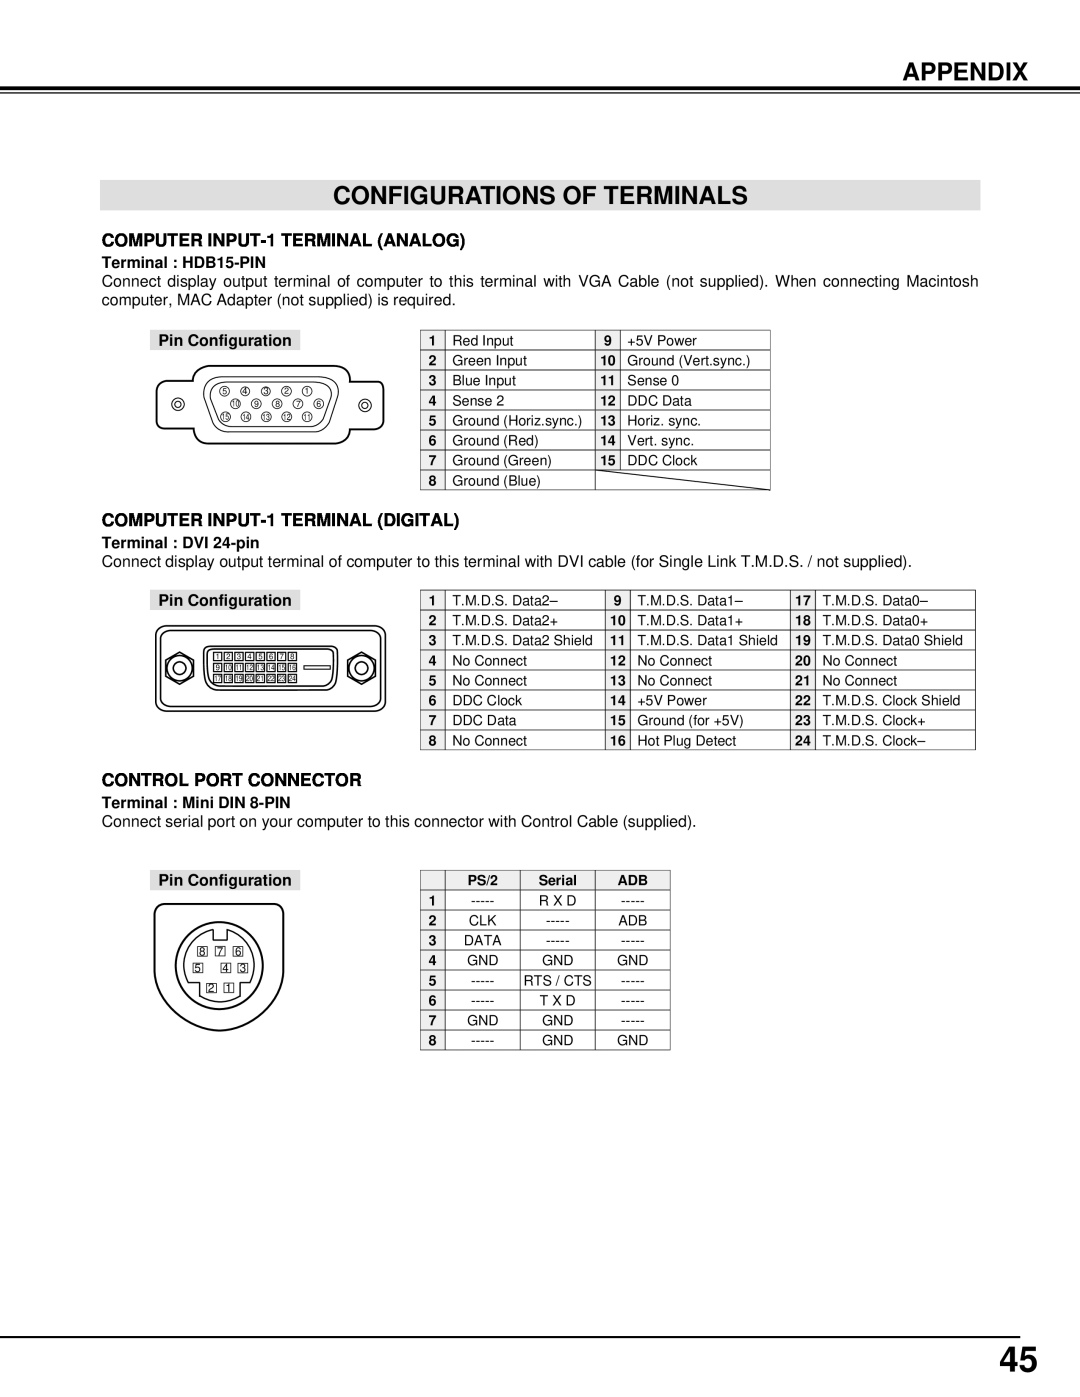 Sanyo PLV-70 owner manual Appendix Configurations Of Terminals, Terminal HDB15-PIN, Pin Configuration, Terminal DVI 24-pin 